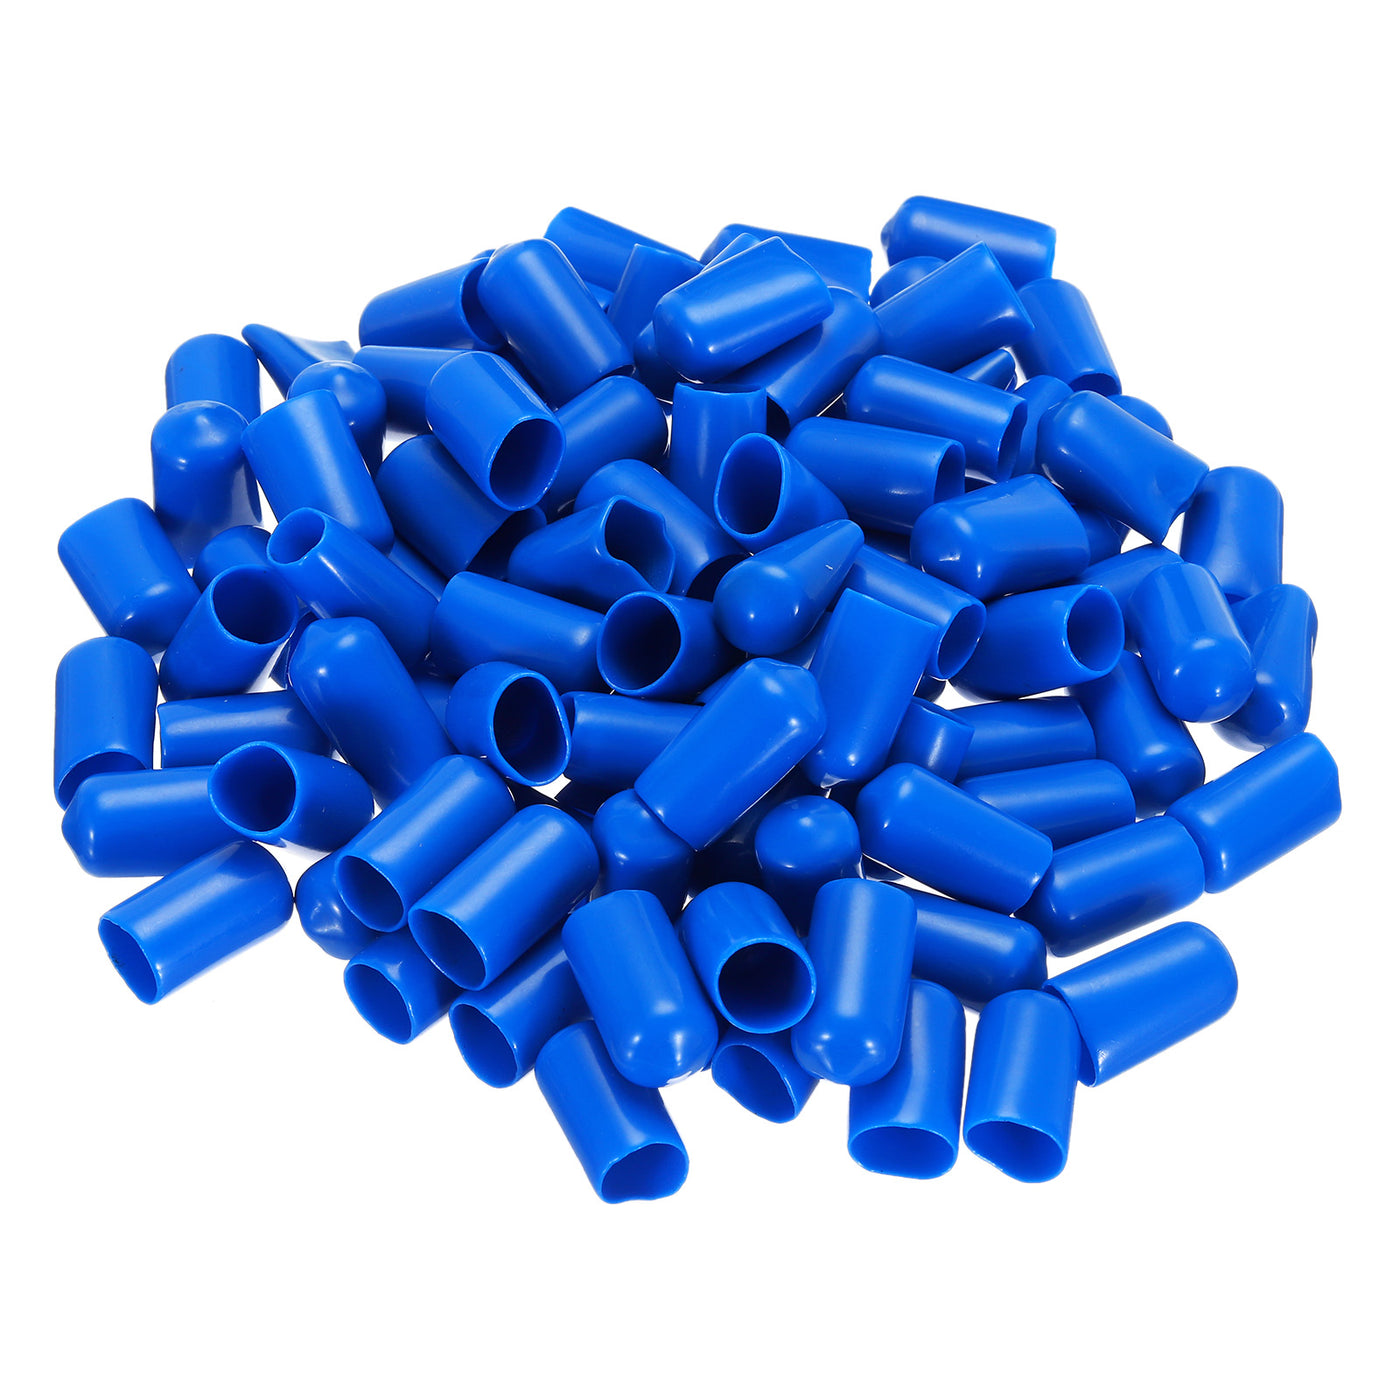 uxcell Uxcell 100pcs Rubber End Caps 11mm ID Vinyl PVC Round Tube Bolt Cap Cover Screw Thread Protectors Blue